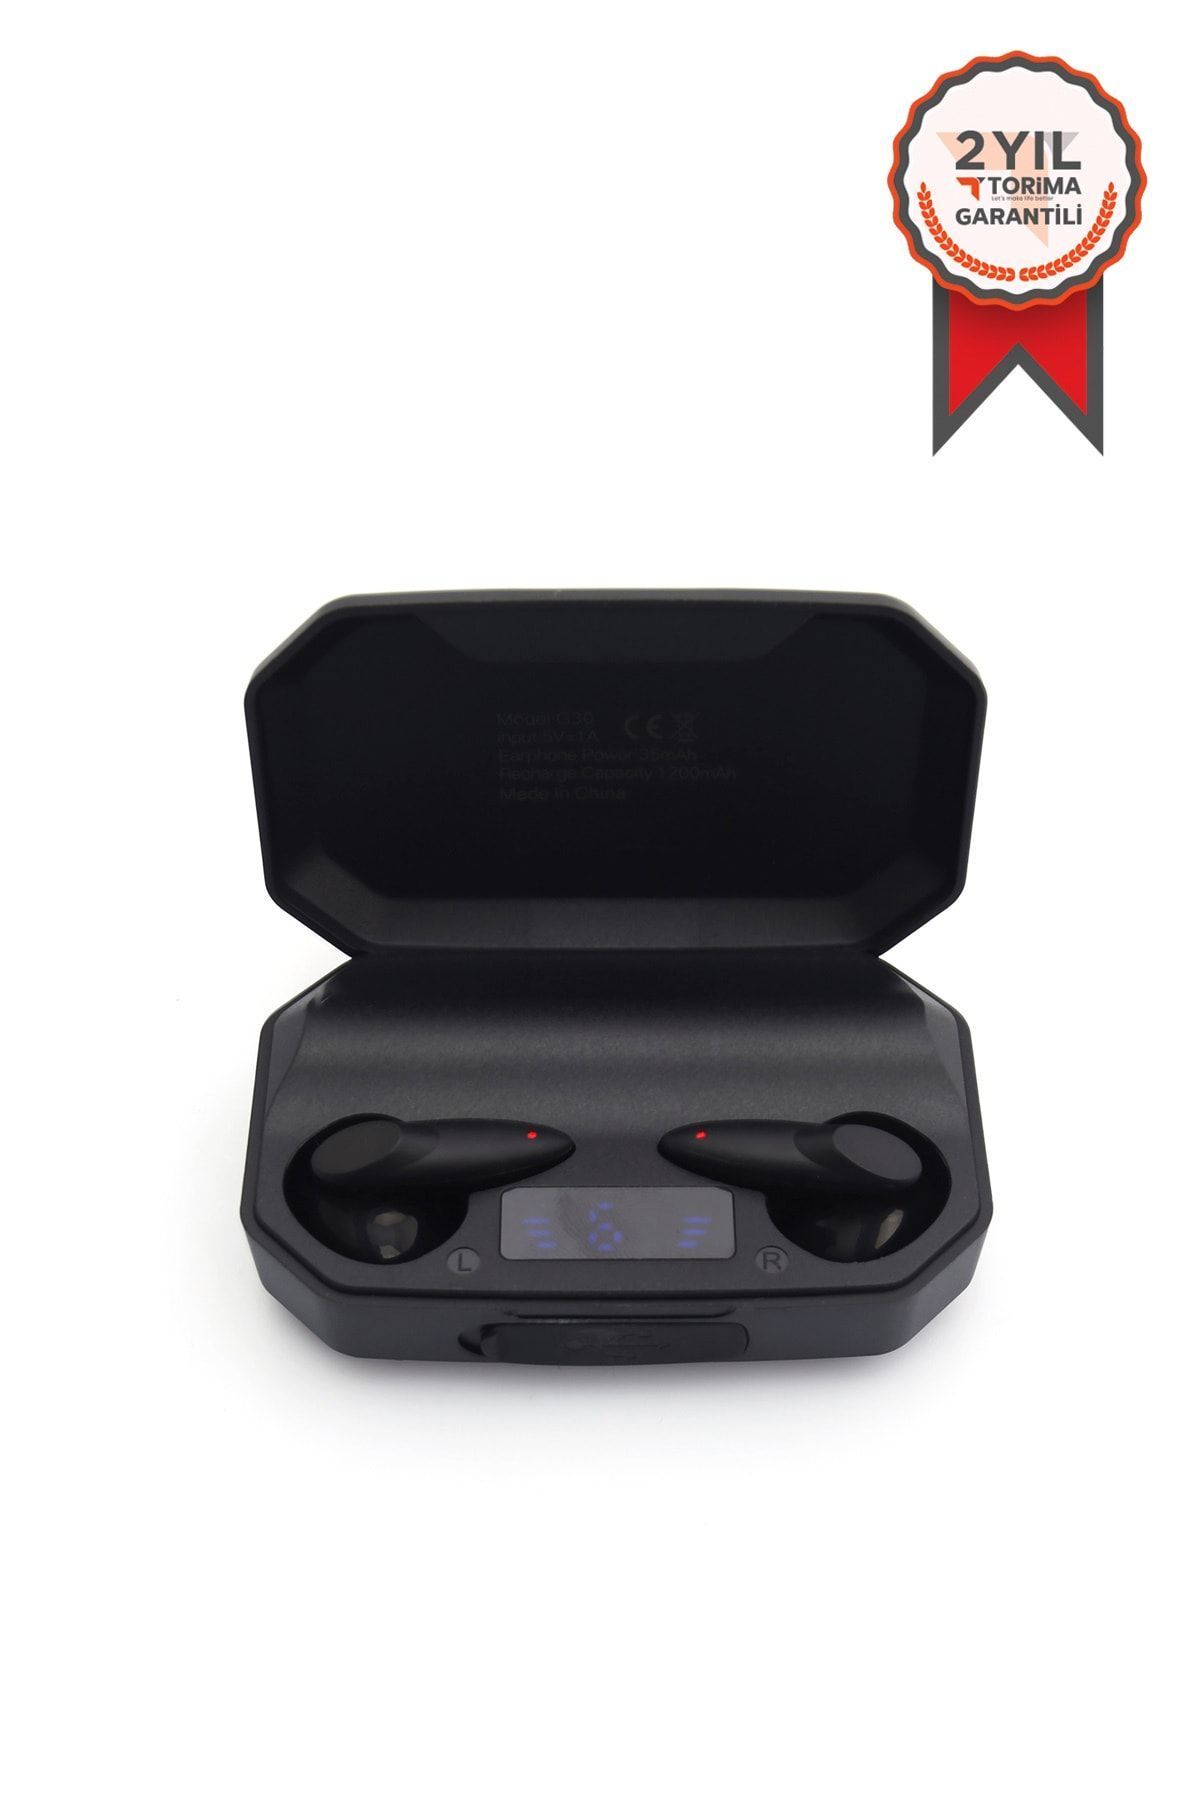 Torima G30 Siyah Profesyonel Oyuncu Kulaklığı Kablosuz Kulakiçi Rgb Işıklı Çift Mikrofonlu Bluetooth 5.2.